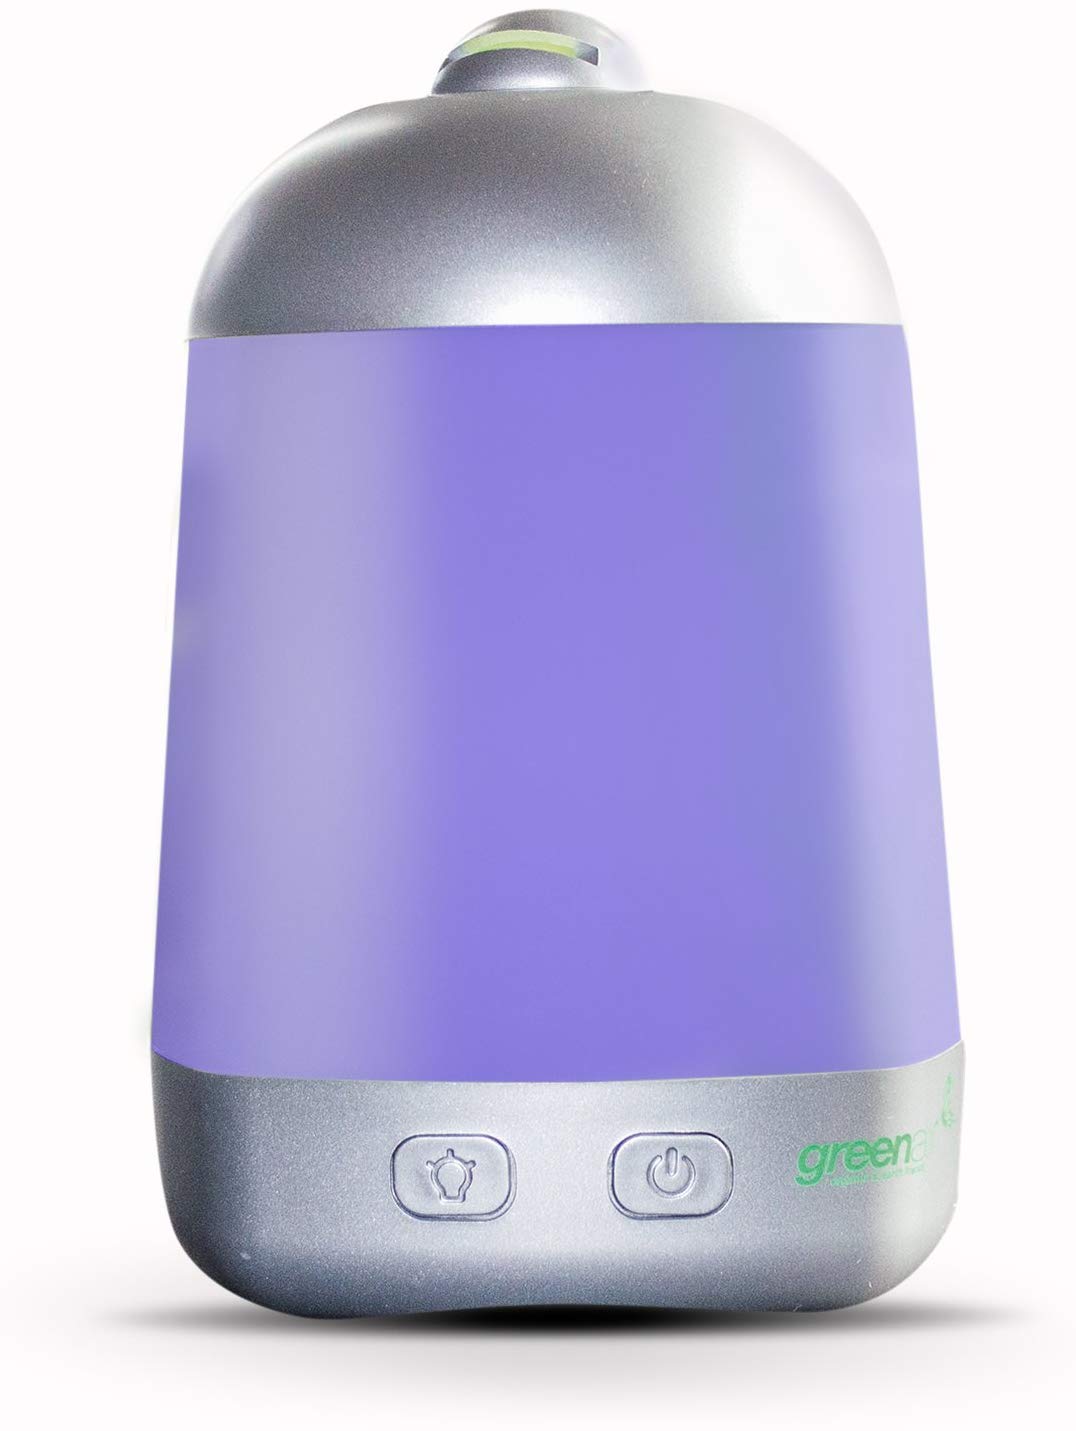 GreenAir SpaVapor+ Instant Wellness 150ml Essential Oil Diffuser $26.99 (REG $49.99)